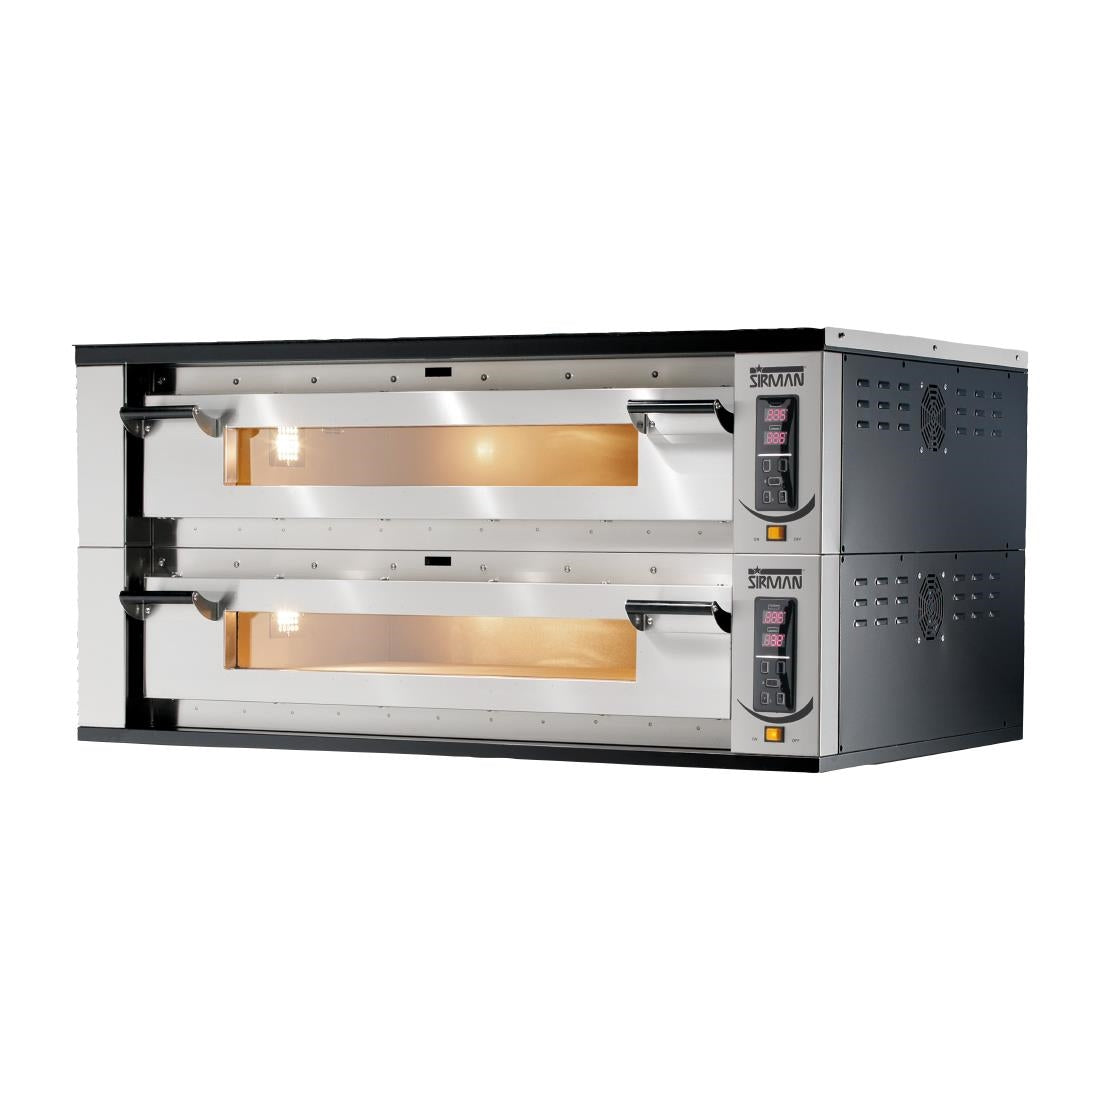 CU086 Sirman Vesuvio 105x70 Double Deck Pizza Oven JD Catering Equipment Solutions Ltd